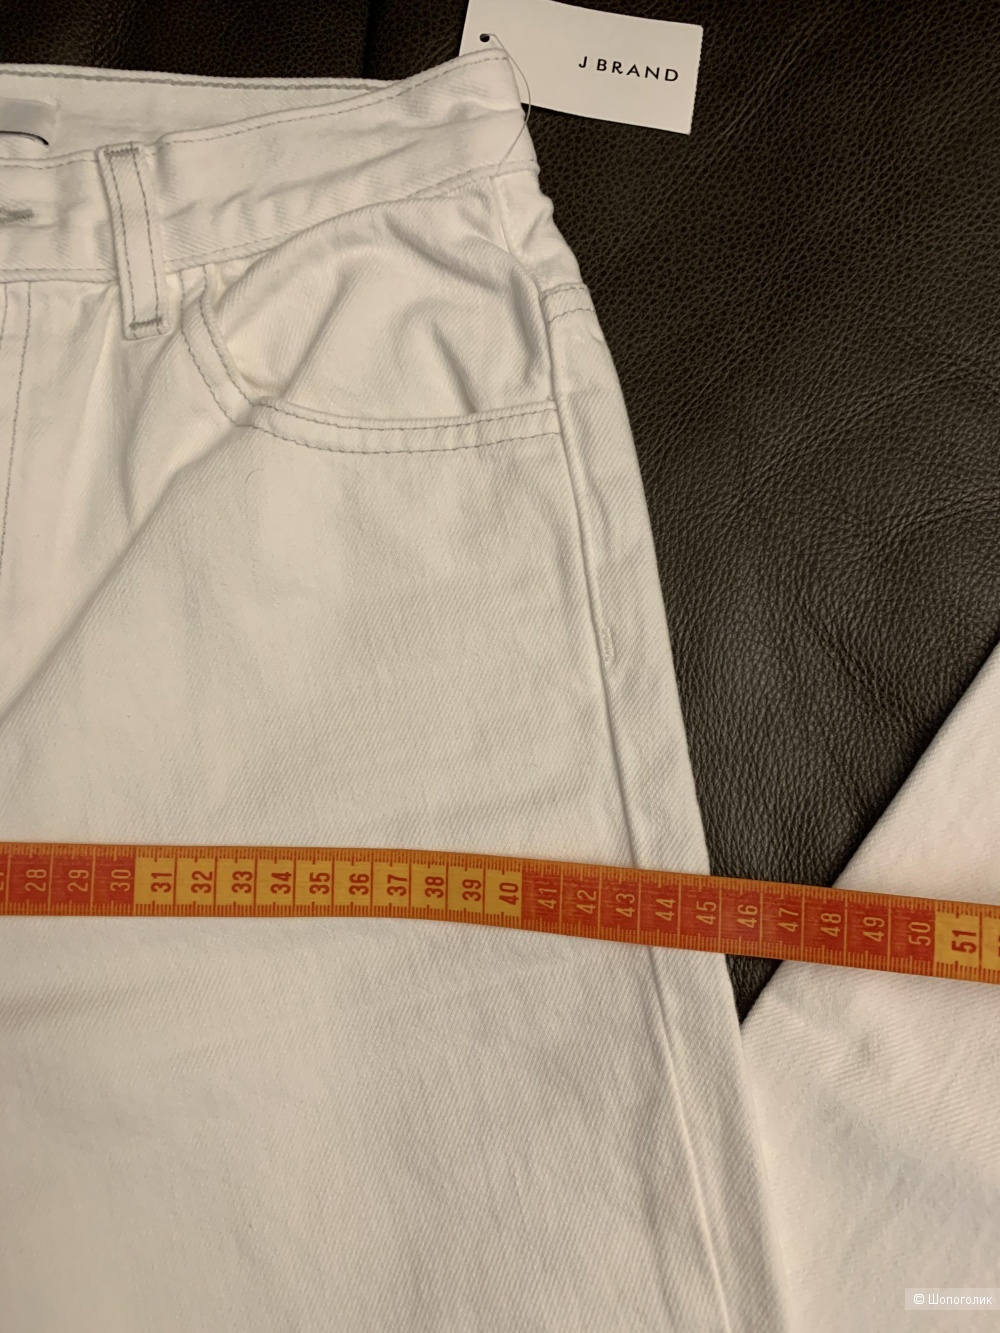 Белые джинсы J Brand Joan, 26 размер